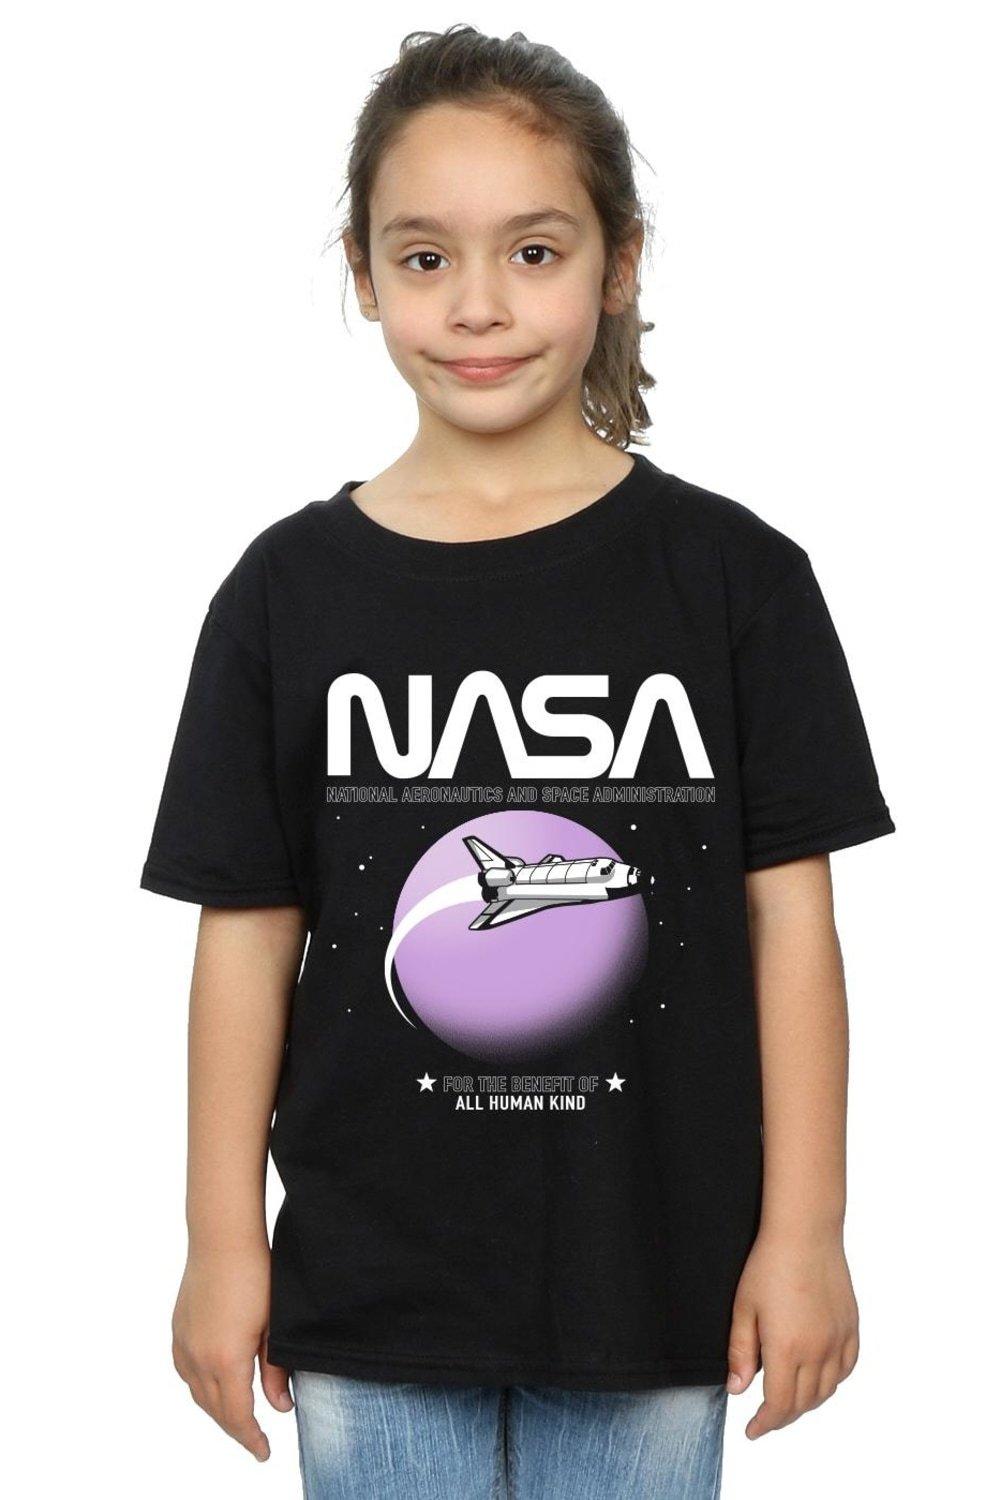 Shuttle Orbit Cotton T-Shirt